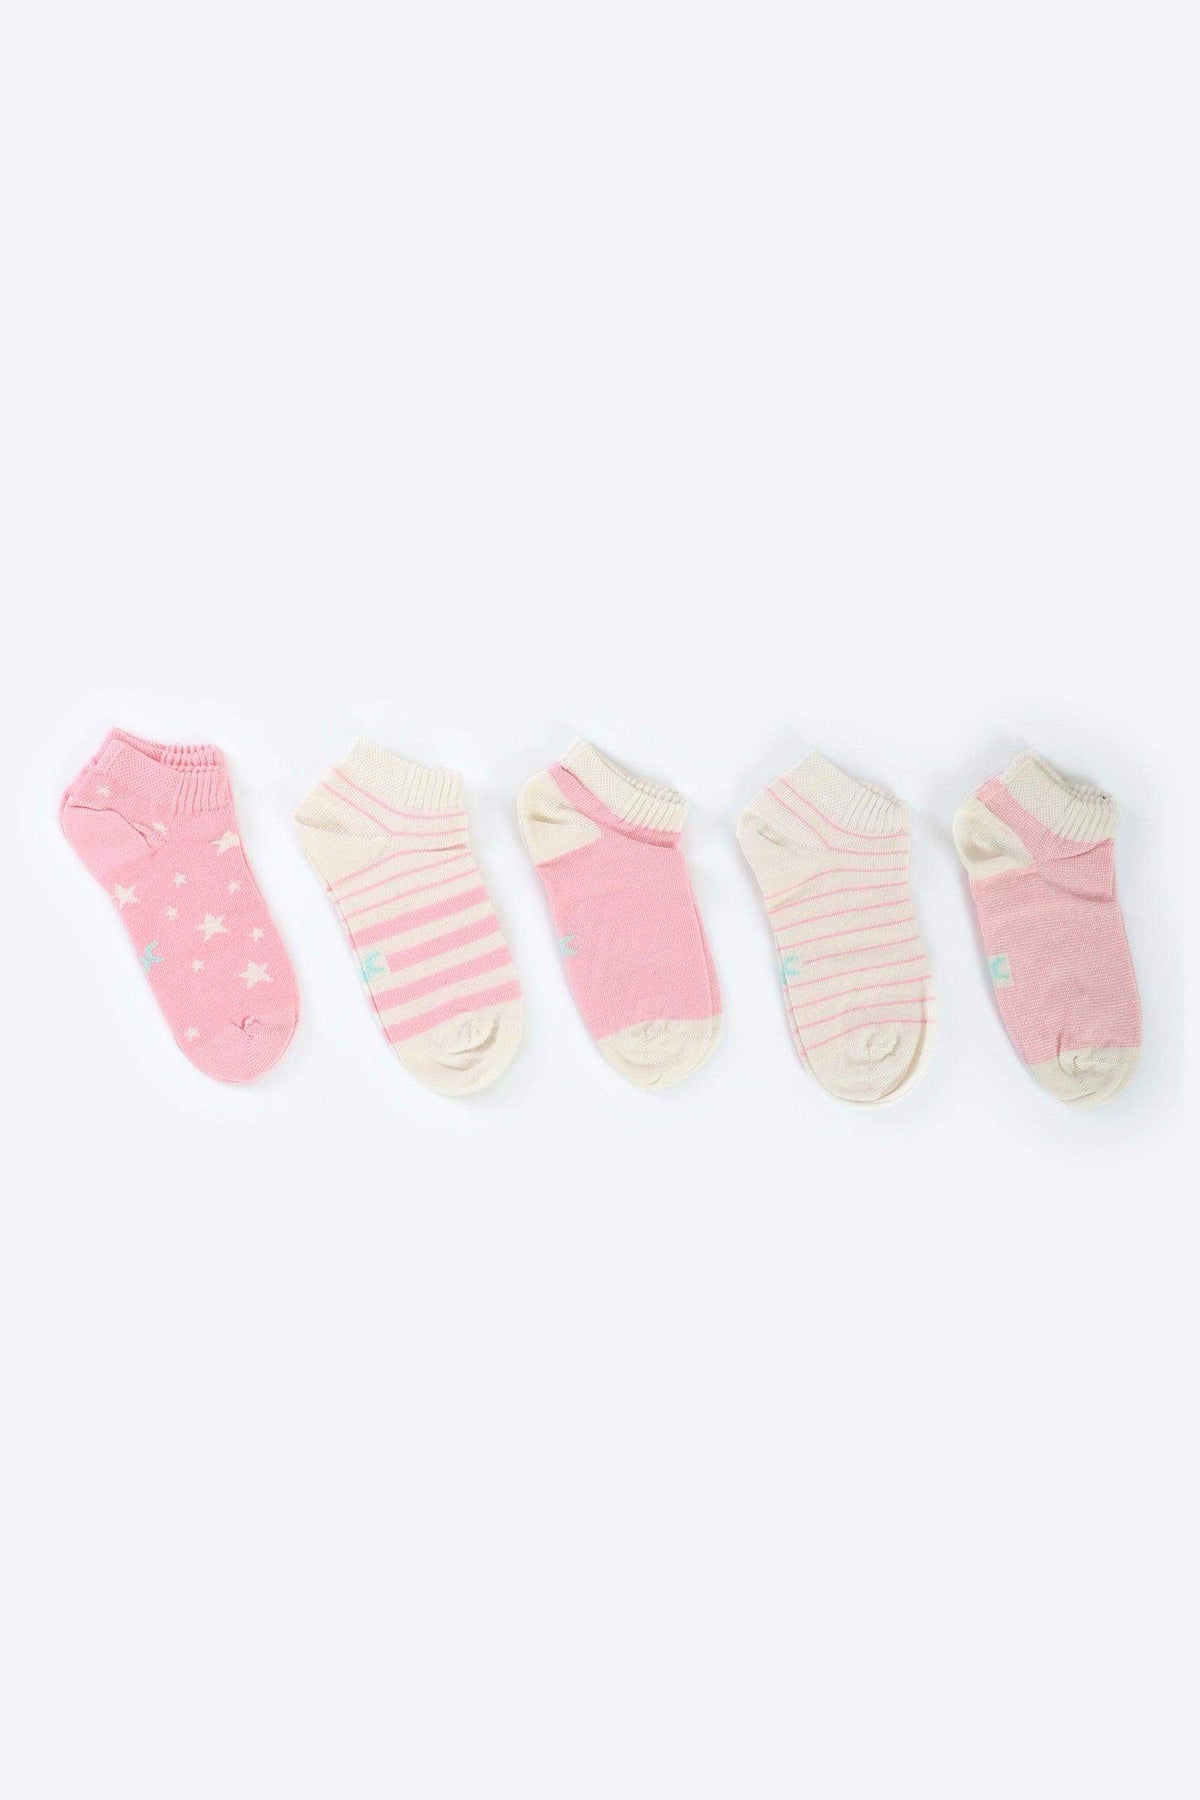 Girly Cotton Ankle Socks - 5 Pairs - Carina - كارينا